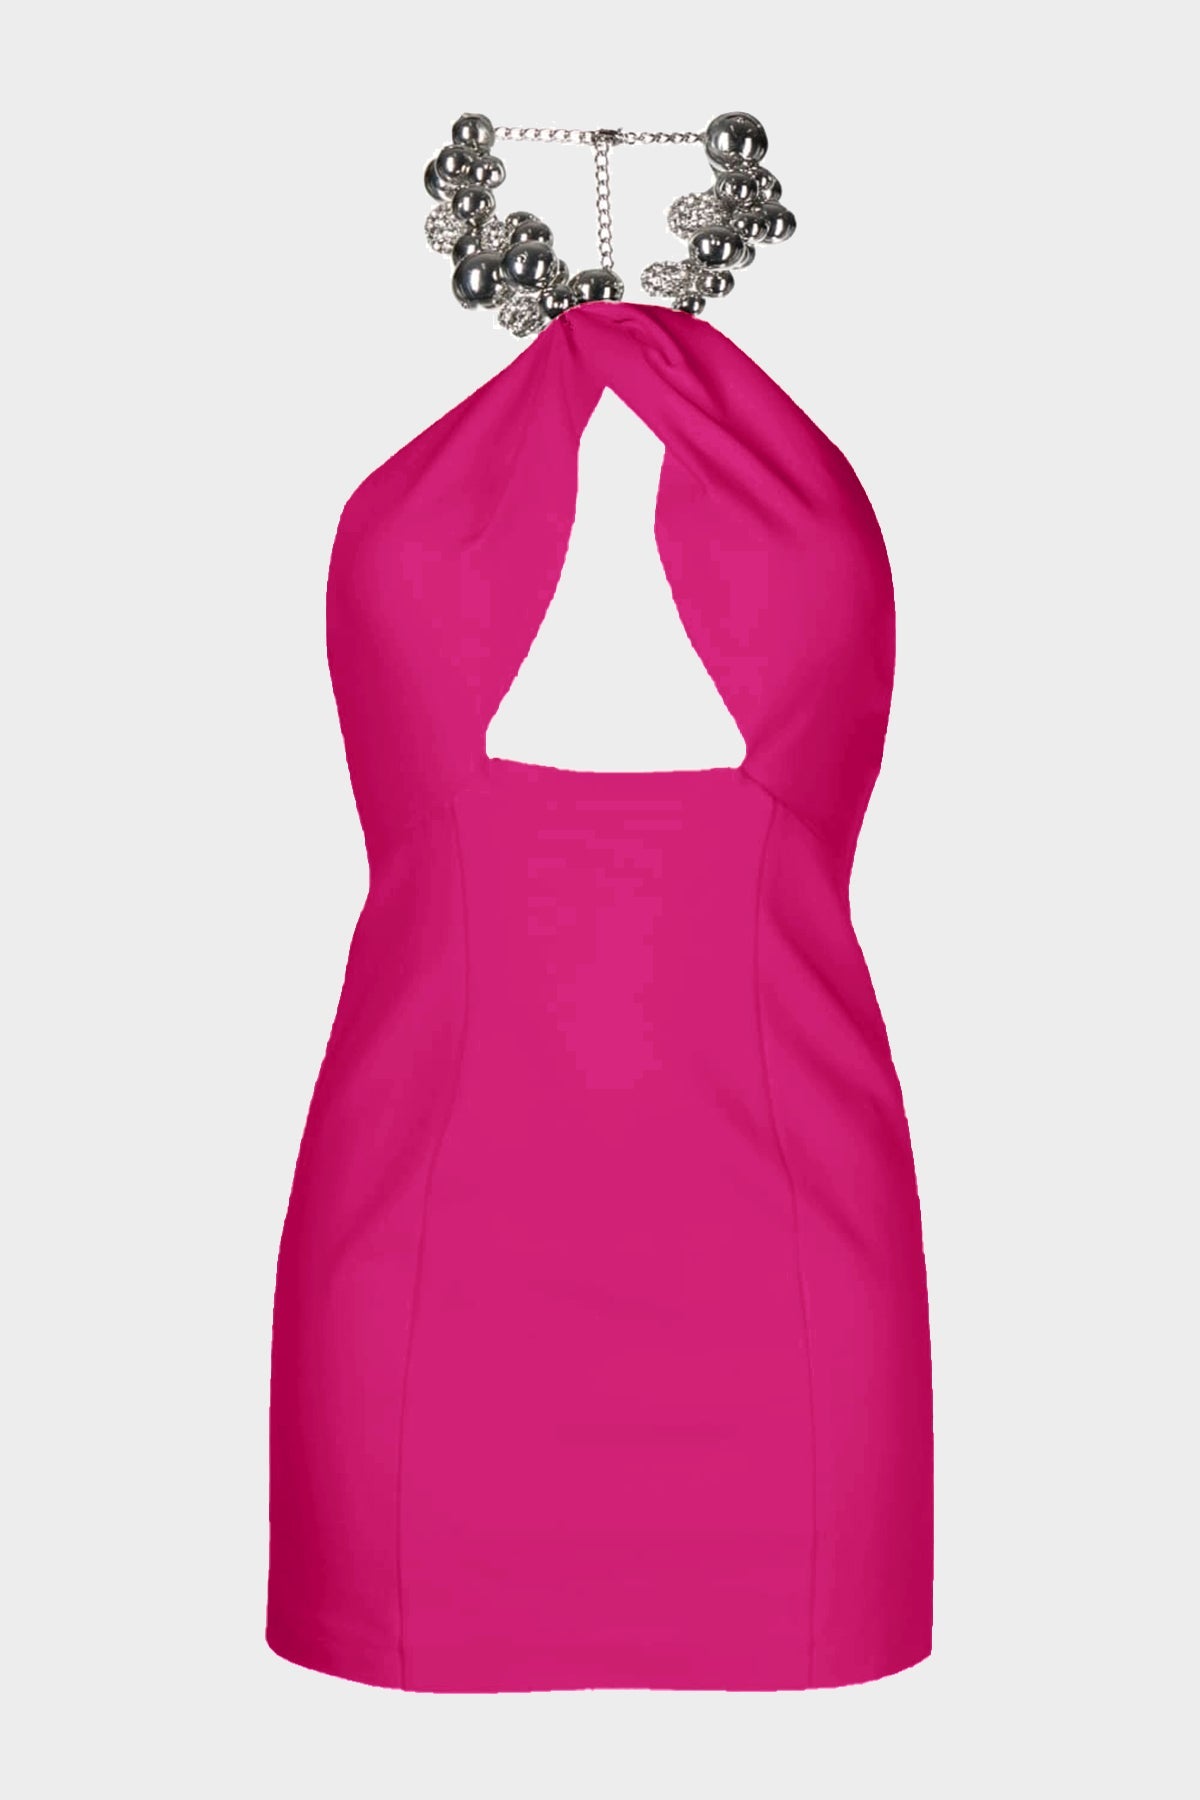 Grape Cluster Halter Dress in Fuchsia - shop-olivia.com